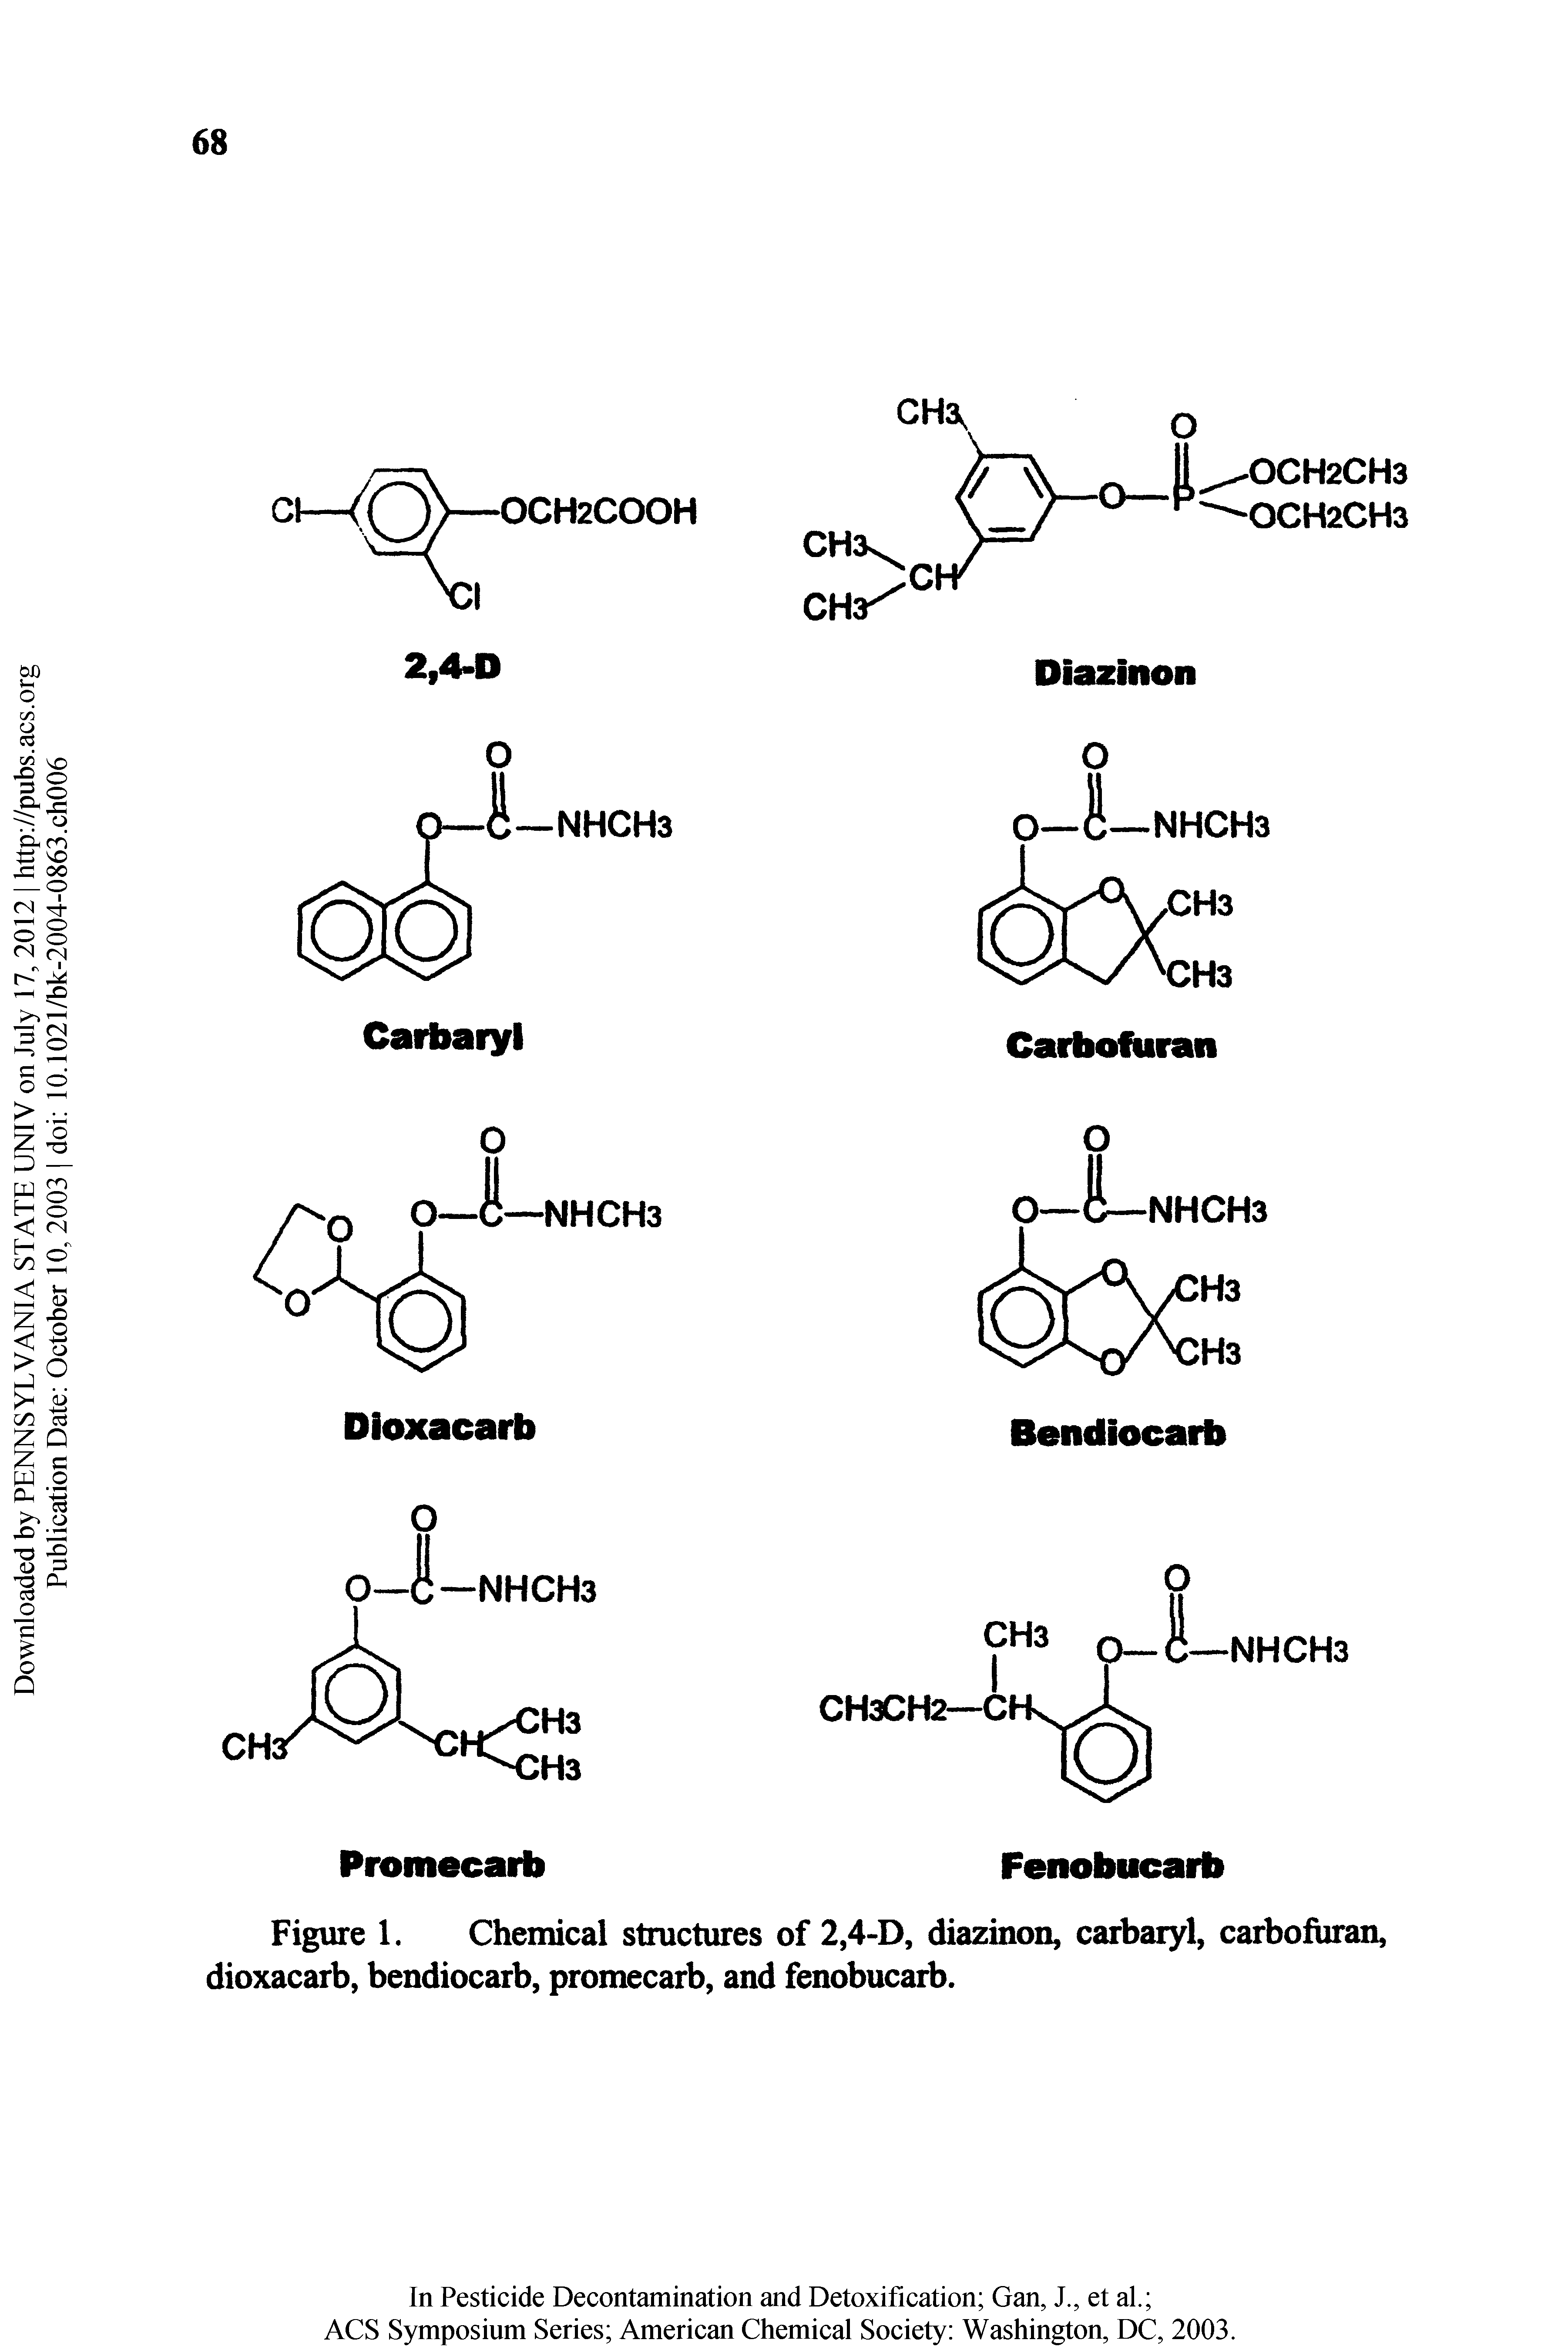 Figure 1. Chemical structures of 2,4-D, diazinon, carbaryl, carbofuran, dioxacarb, bendiocarb, promecarb, and fenobucarb.